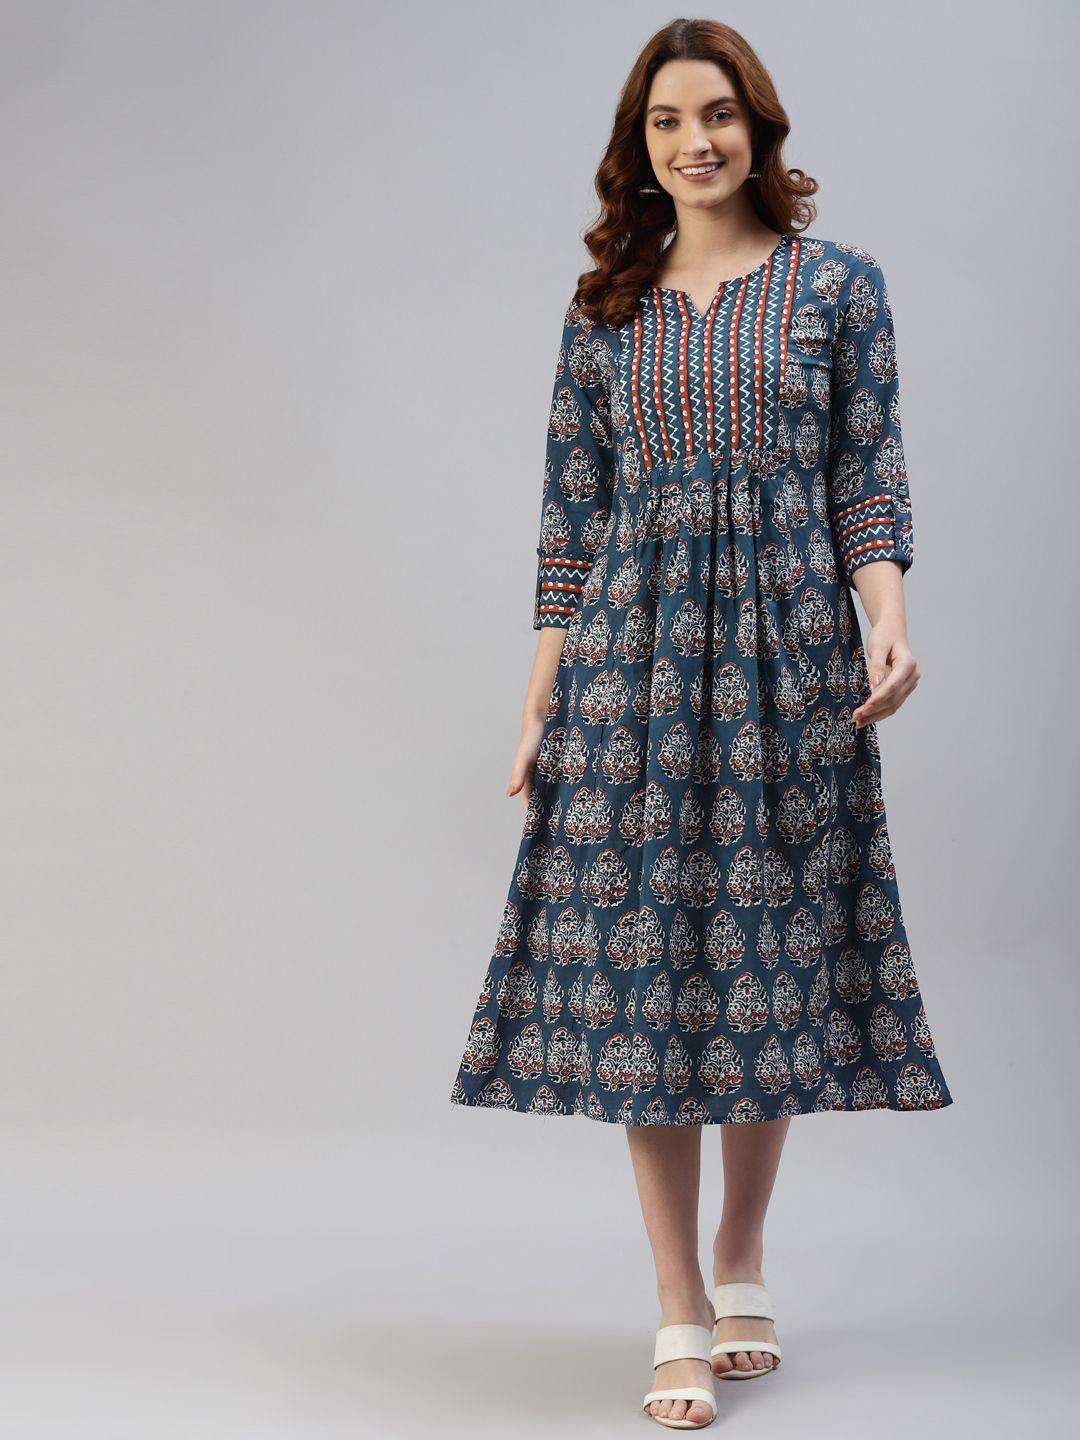 svarchi-women-teal-blue-&-white-ethnic-motifs-printed-a-line-midi-dress